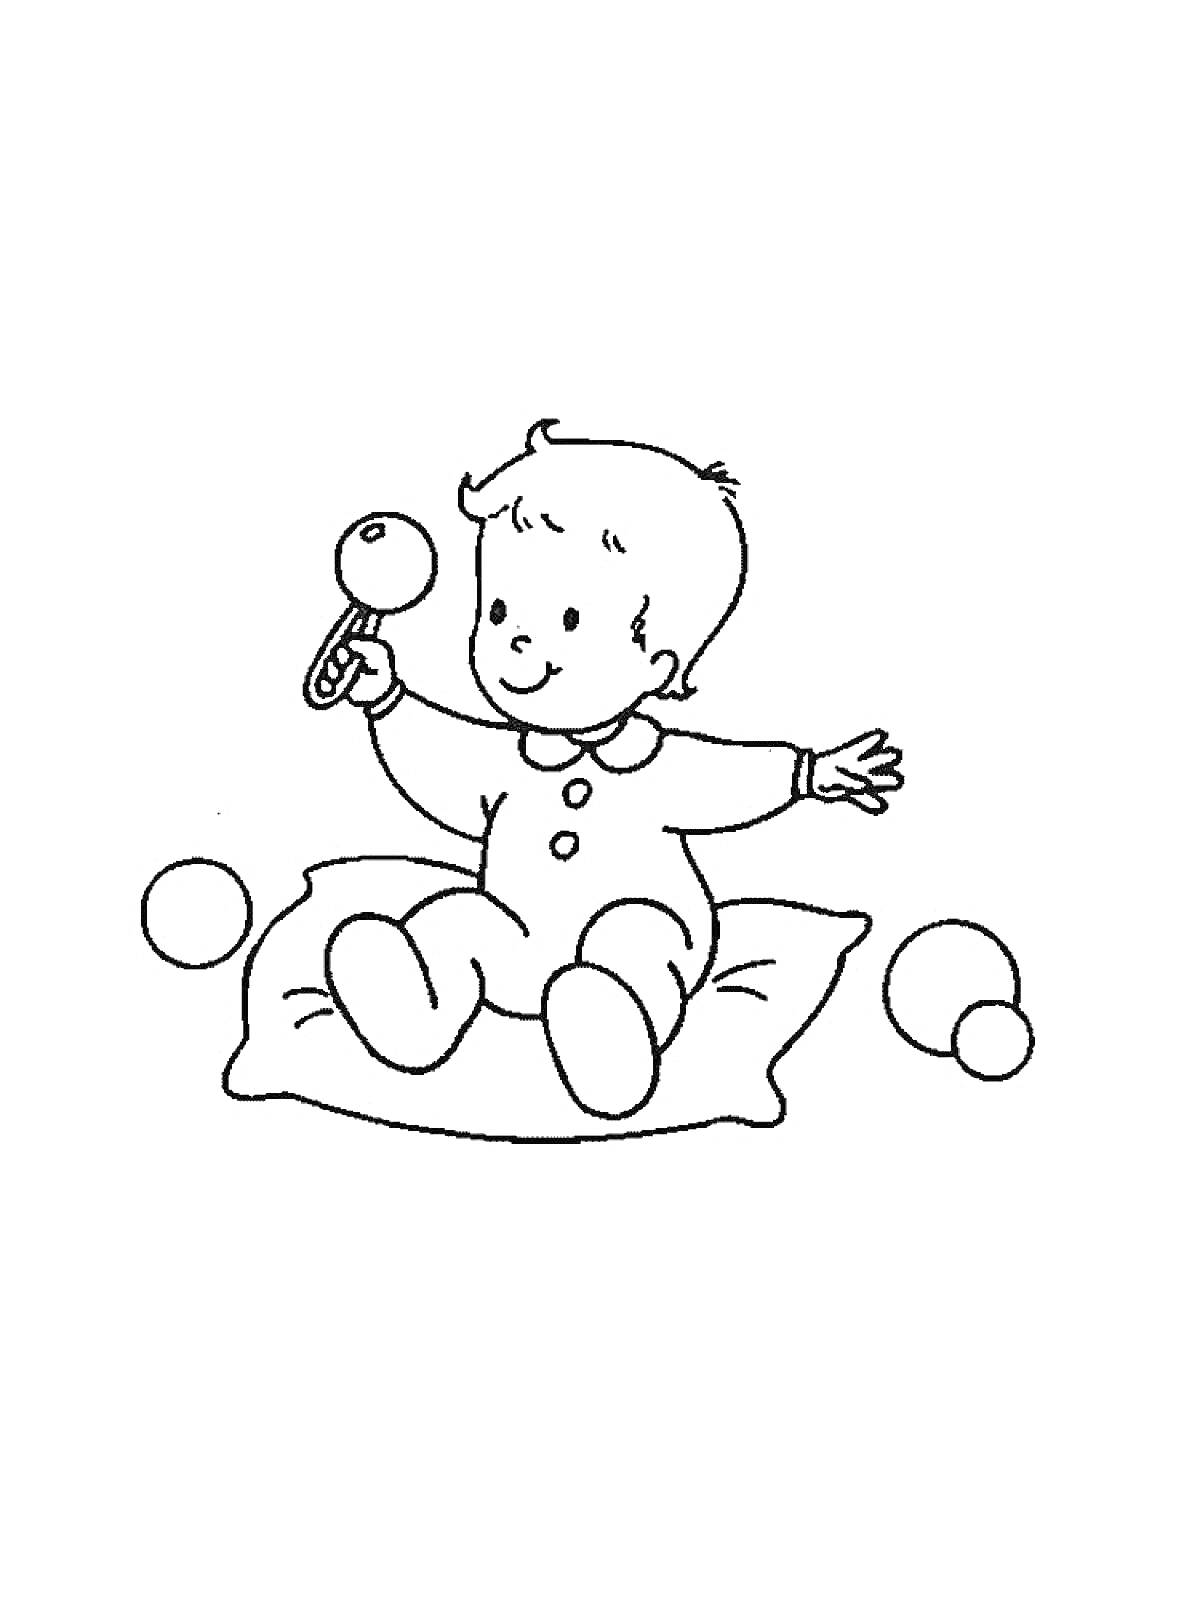 Младенец с погремушкой на подушке и три шара